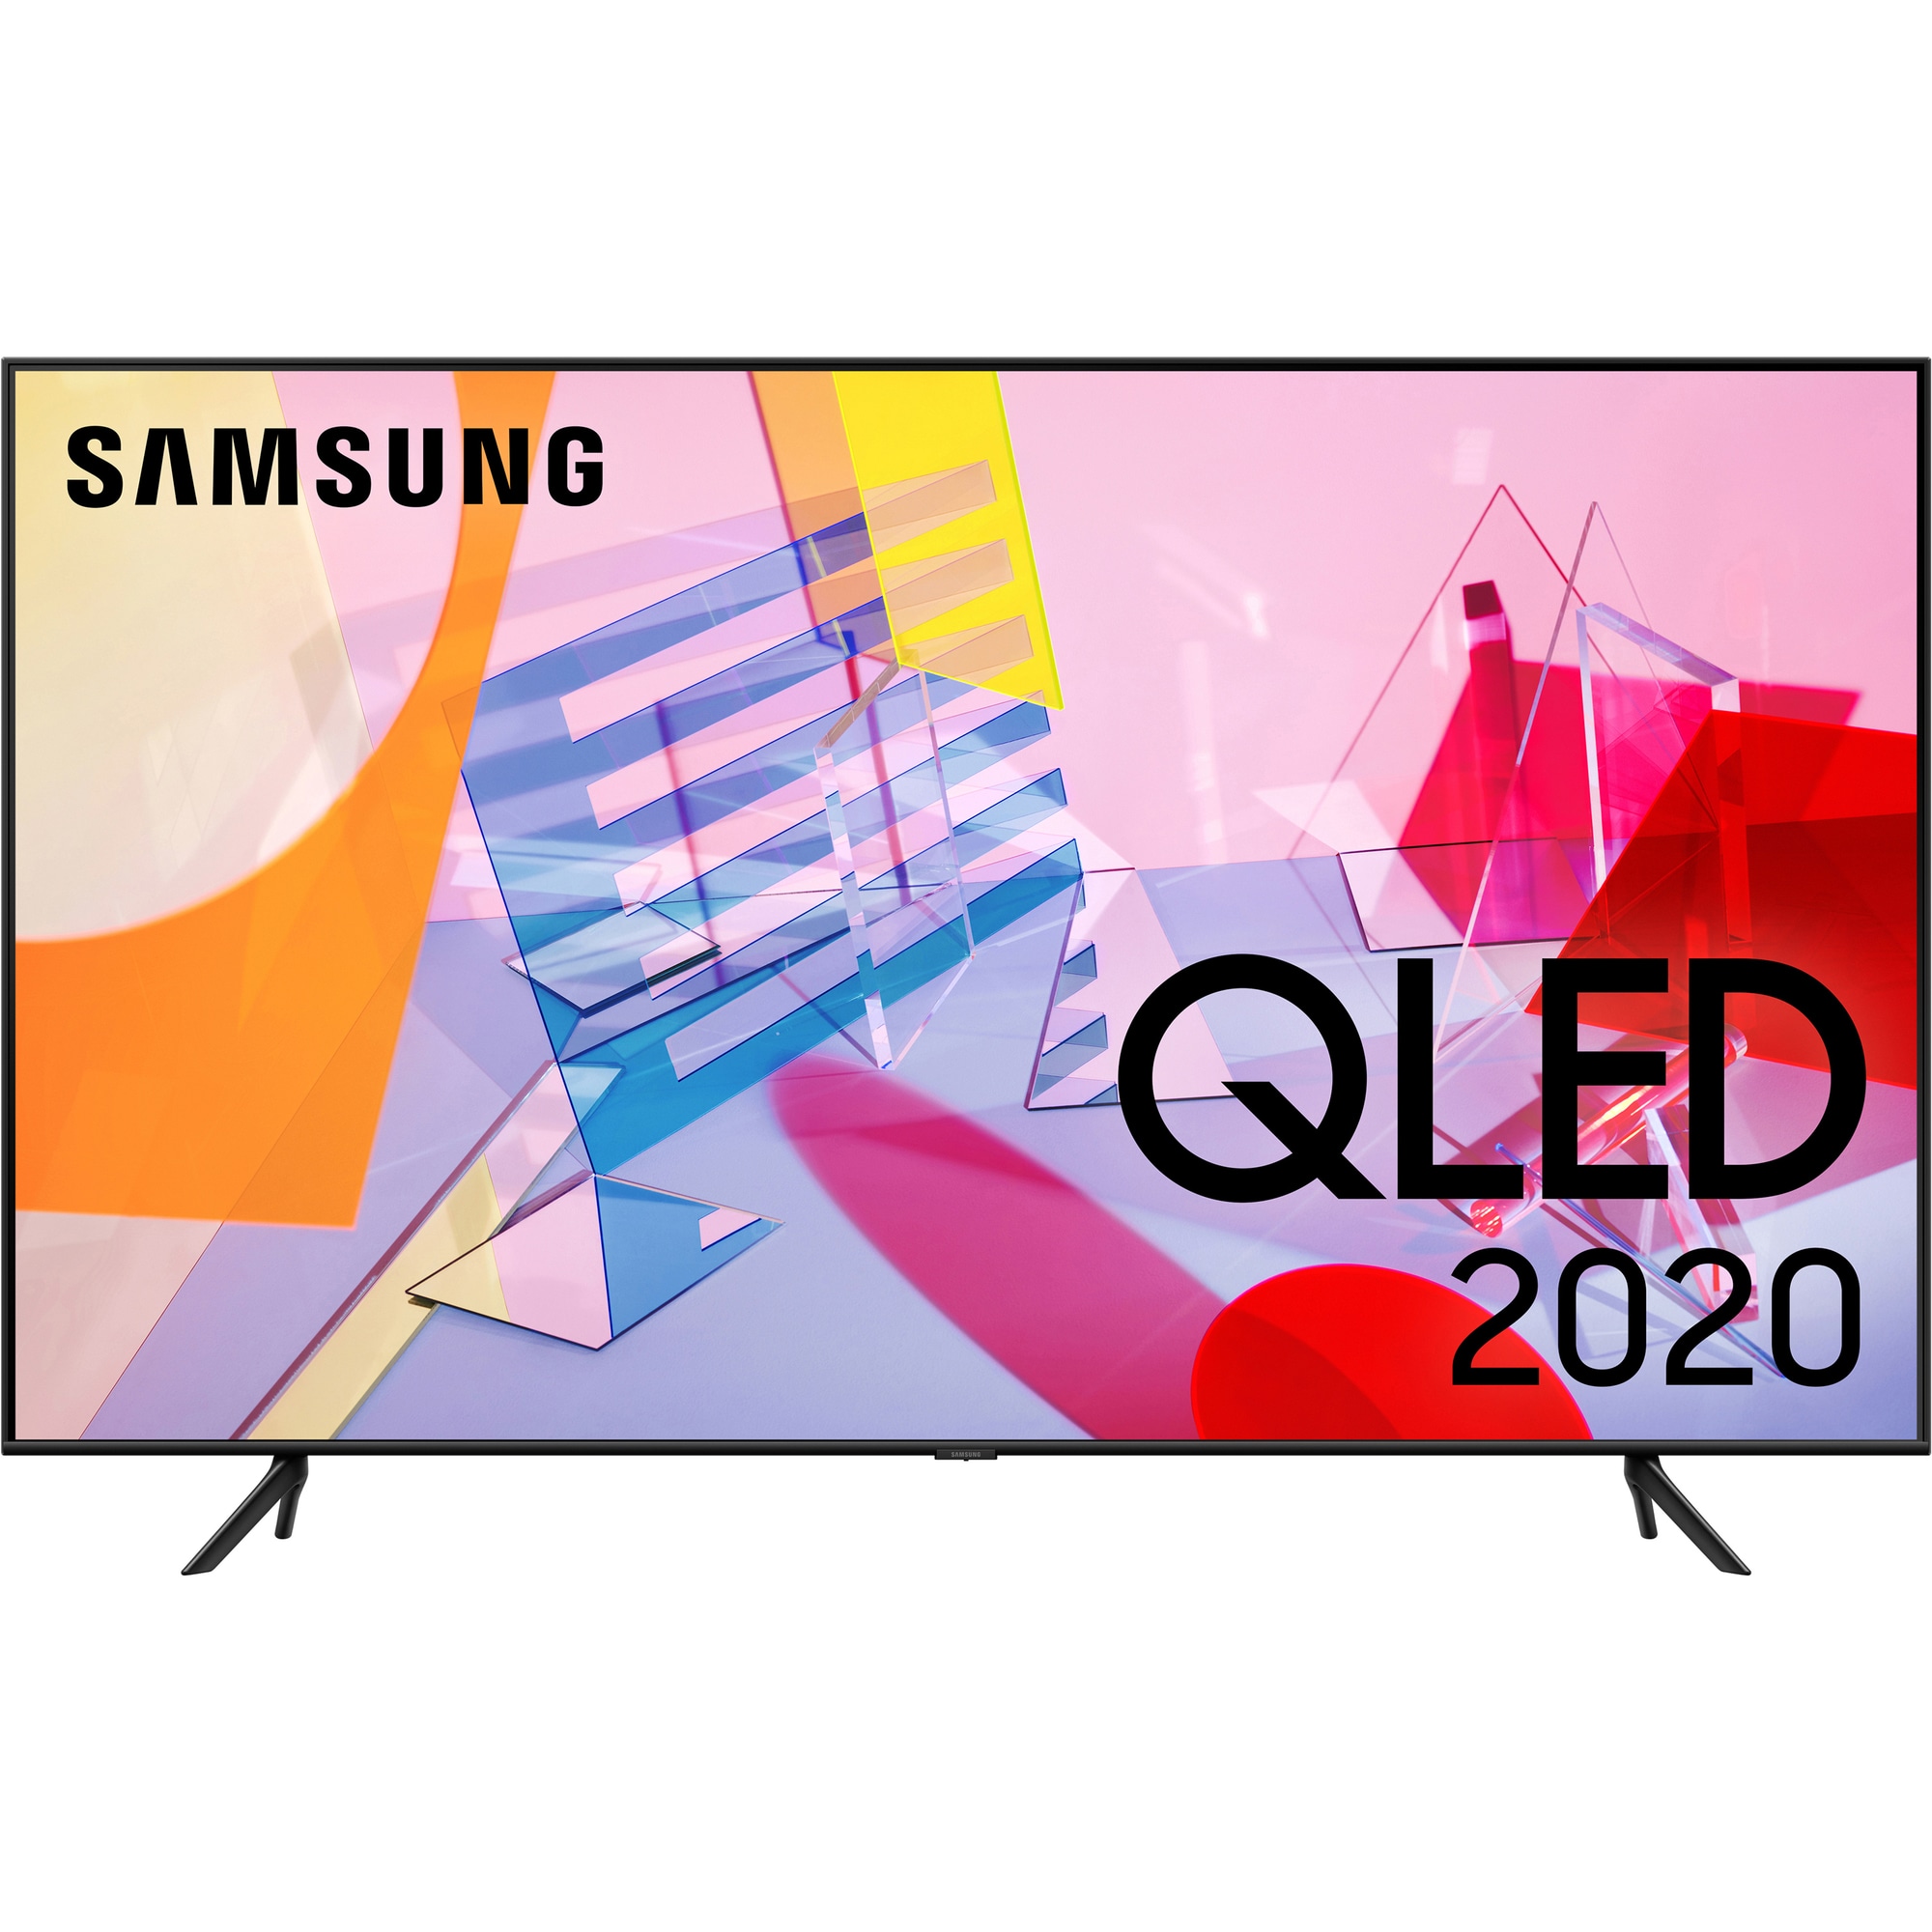 Samsung 65" Q60T 4K UHD QLED Smart TV Elkjøp